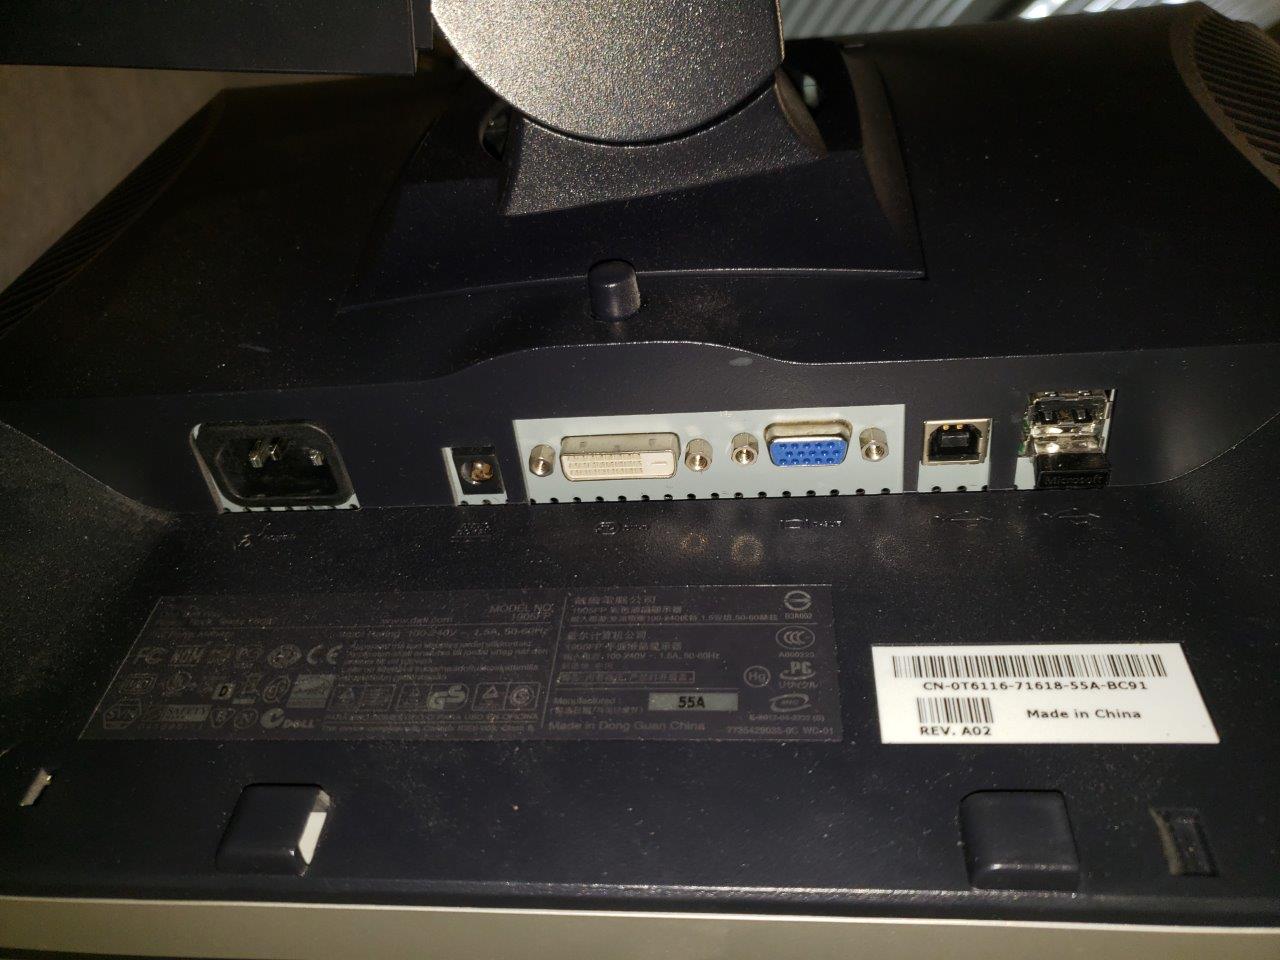 19" Dell 1905FP DVI/VGA LCD Monitor w/USB (Silver/Black)